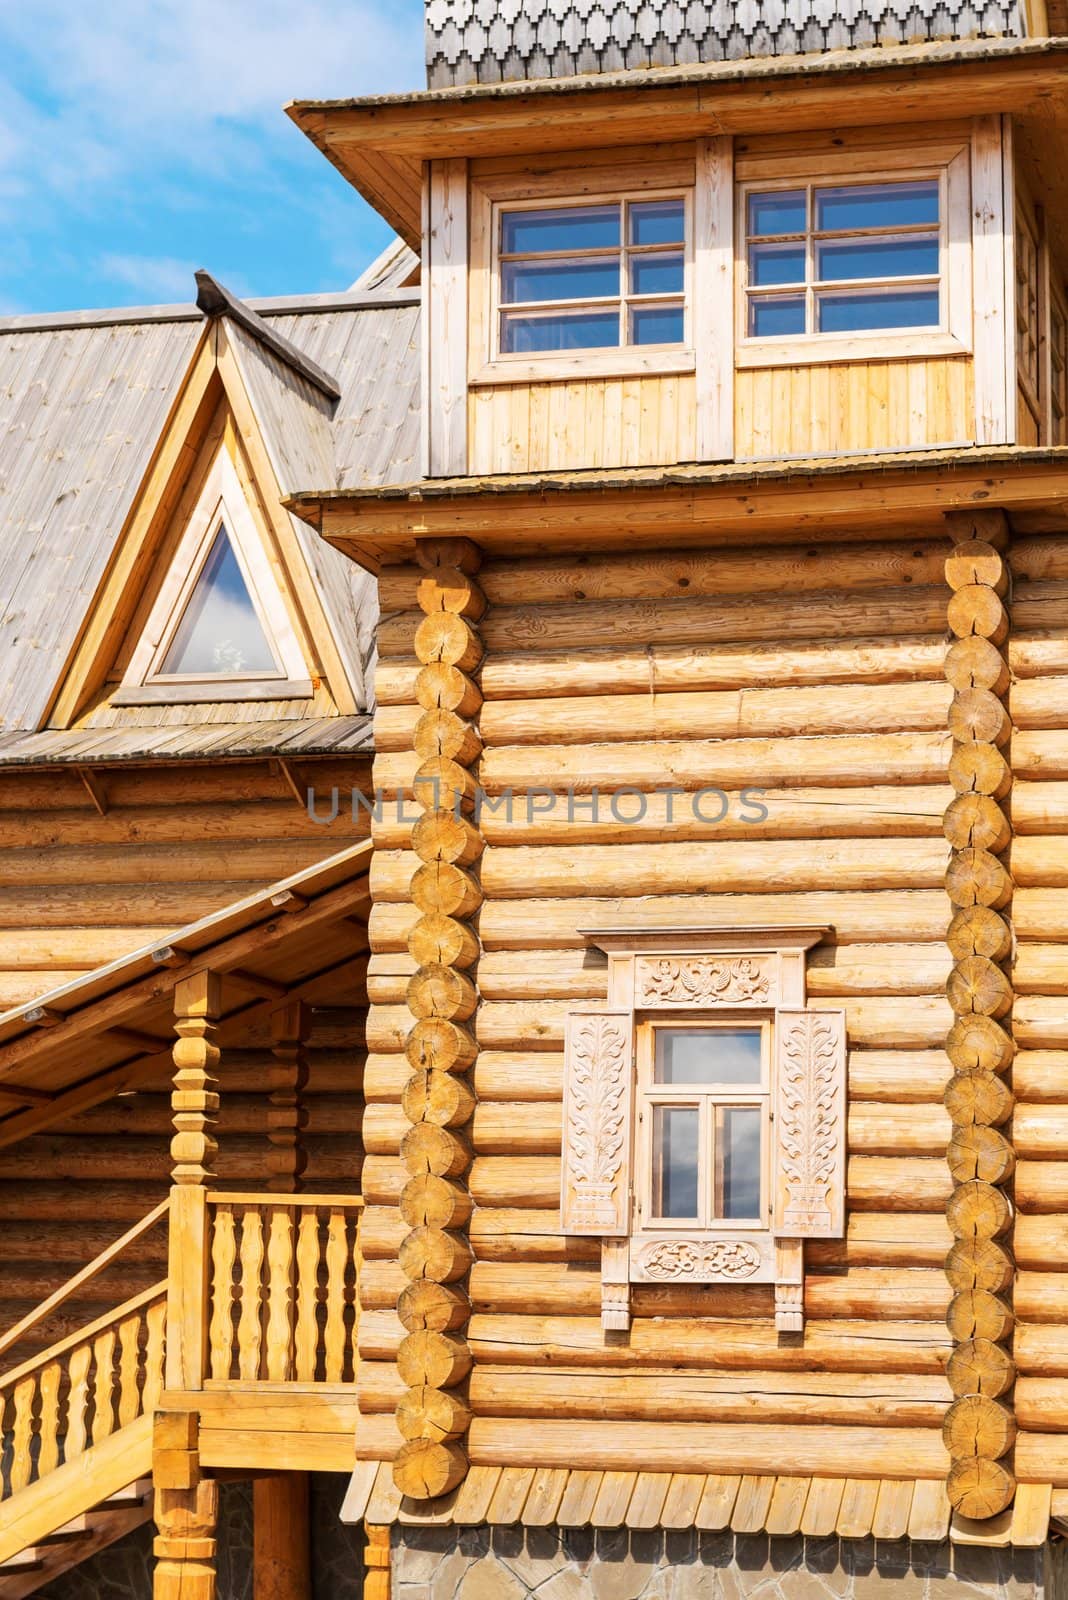 Wooden blockhouse by iryna_rasko